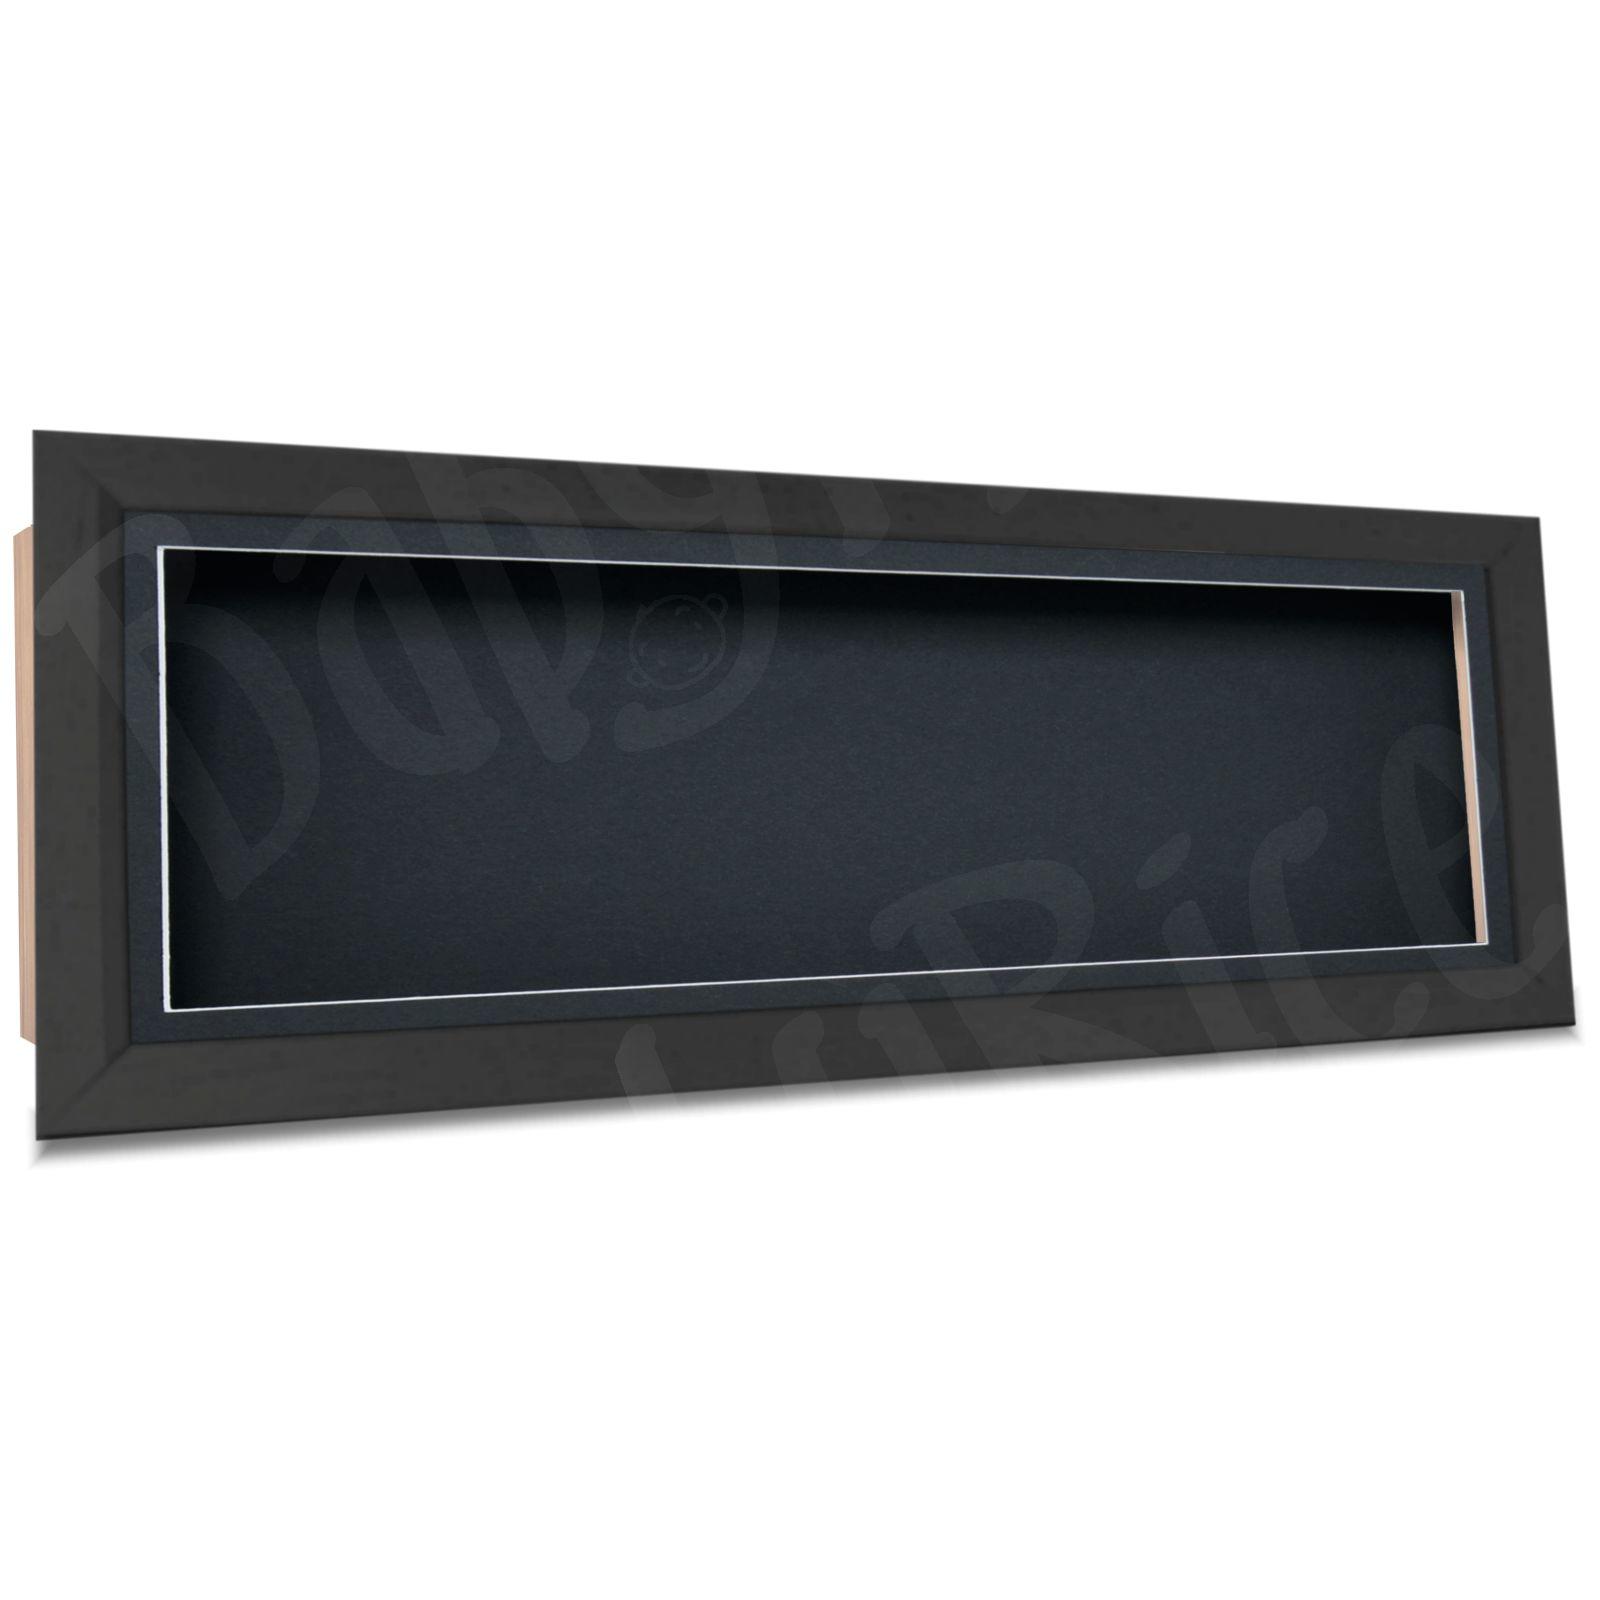 Long Black display frame